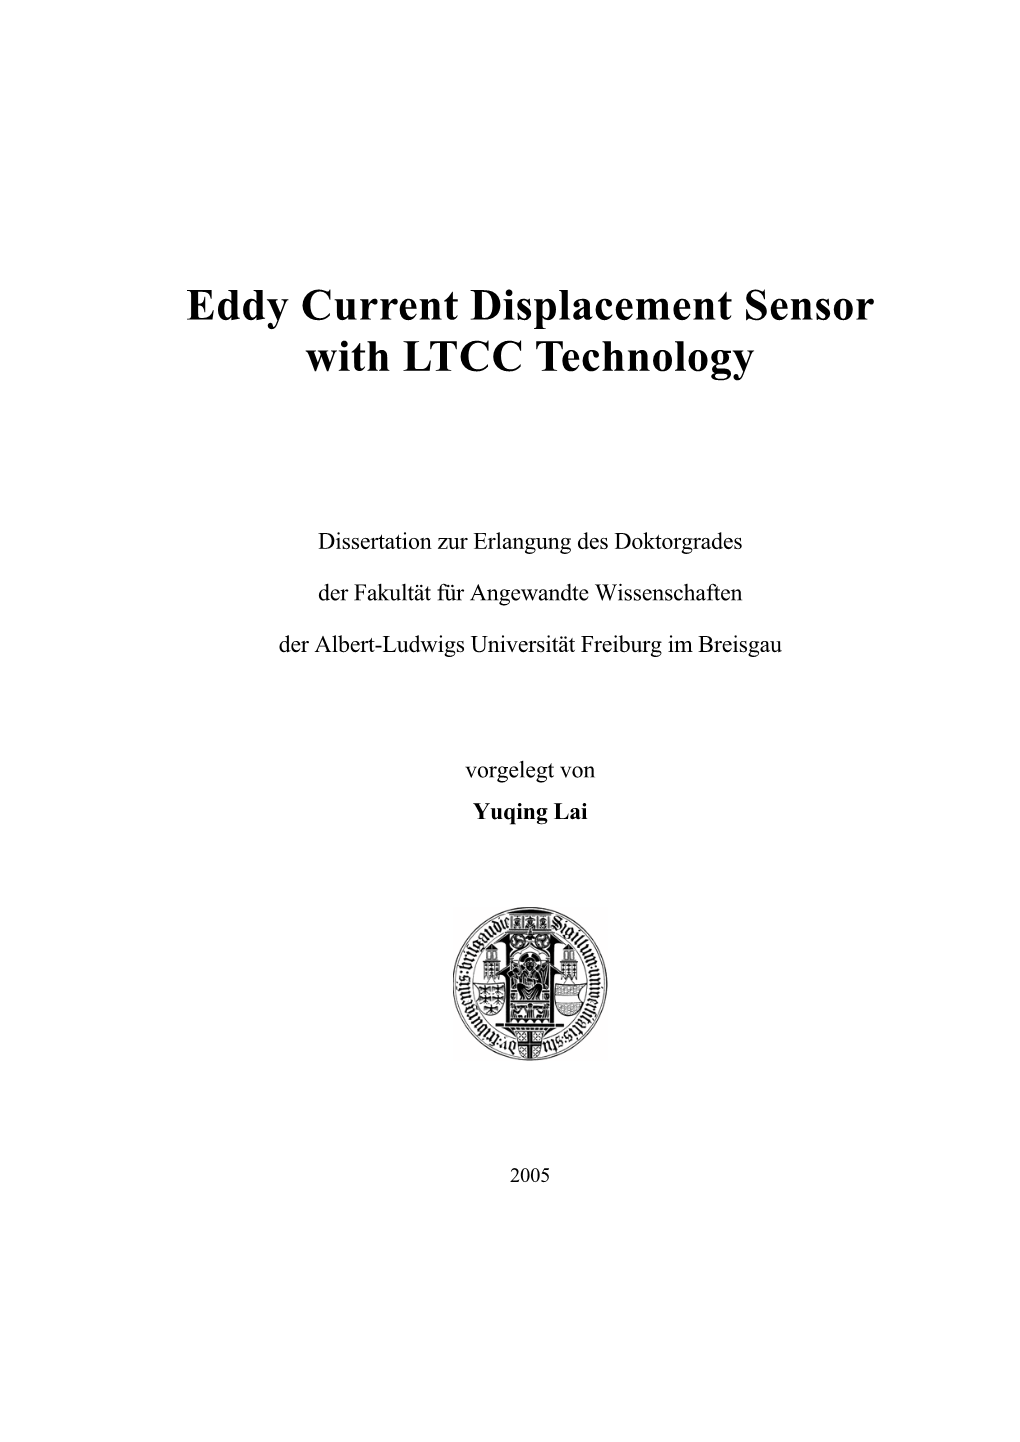 Eddy Current Displacement Sensor with LTCC Technology